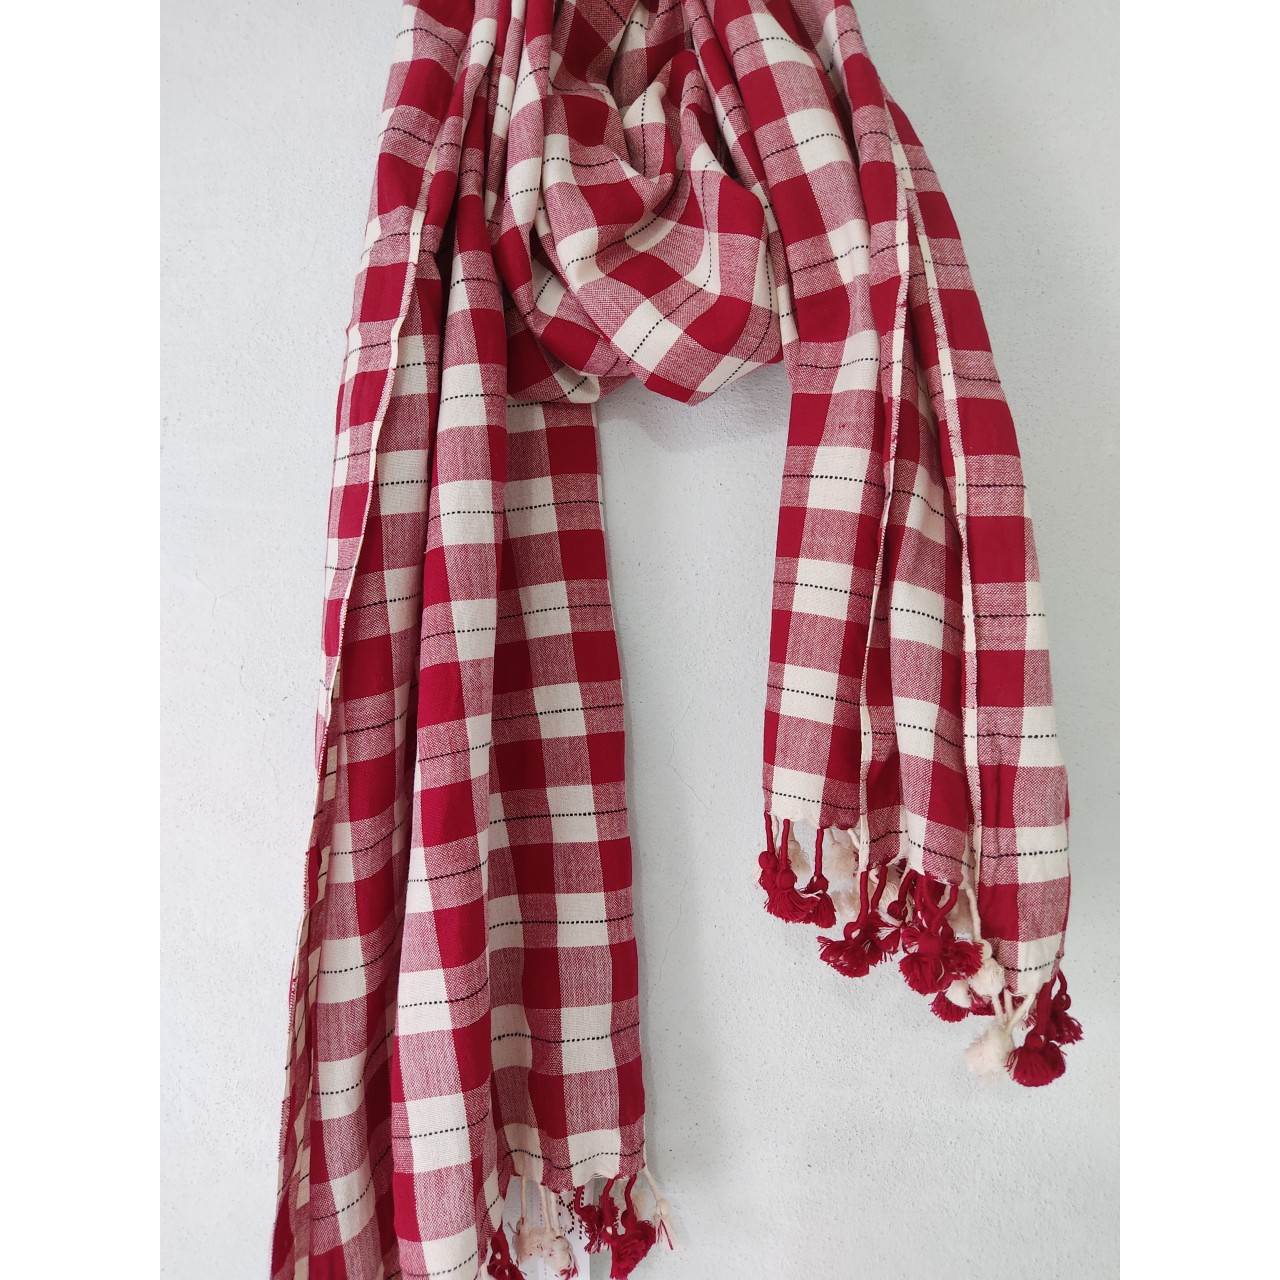 (306) Cotton Azo-free dyed stole with cotton motif, cotton extra weft from Kutch - Maroon, kora, checks, white, off white